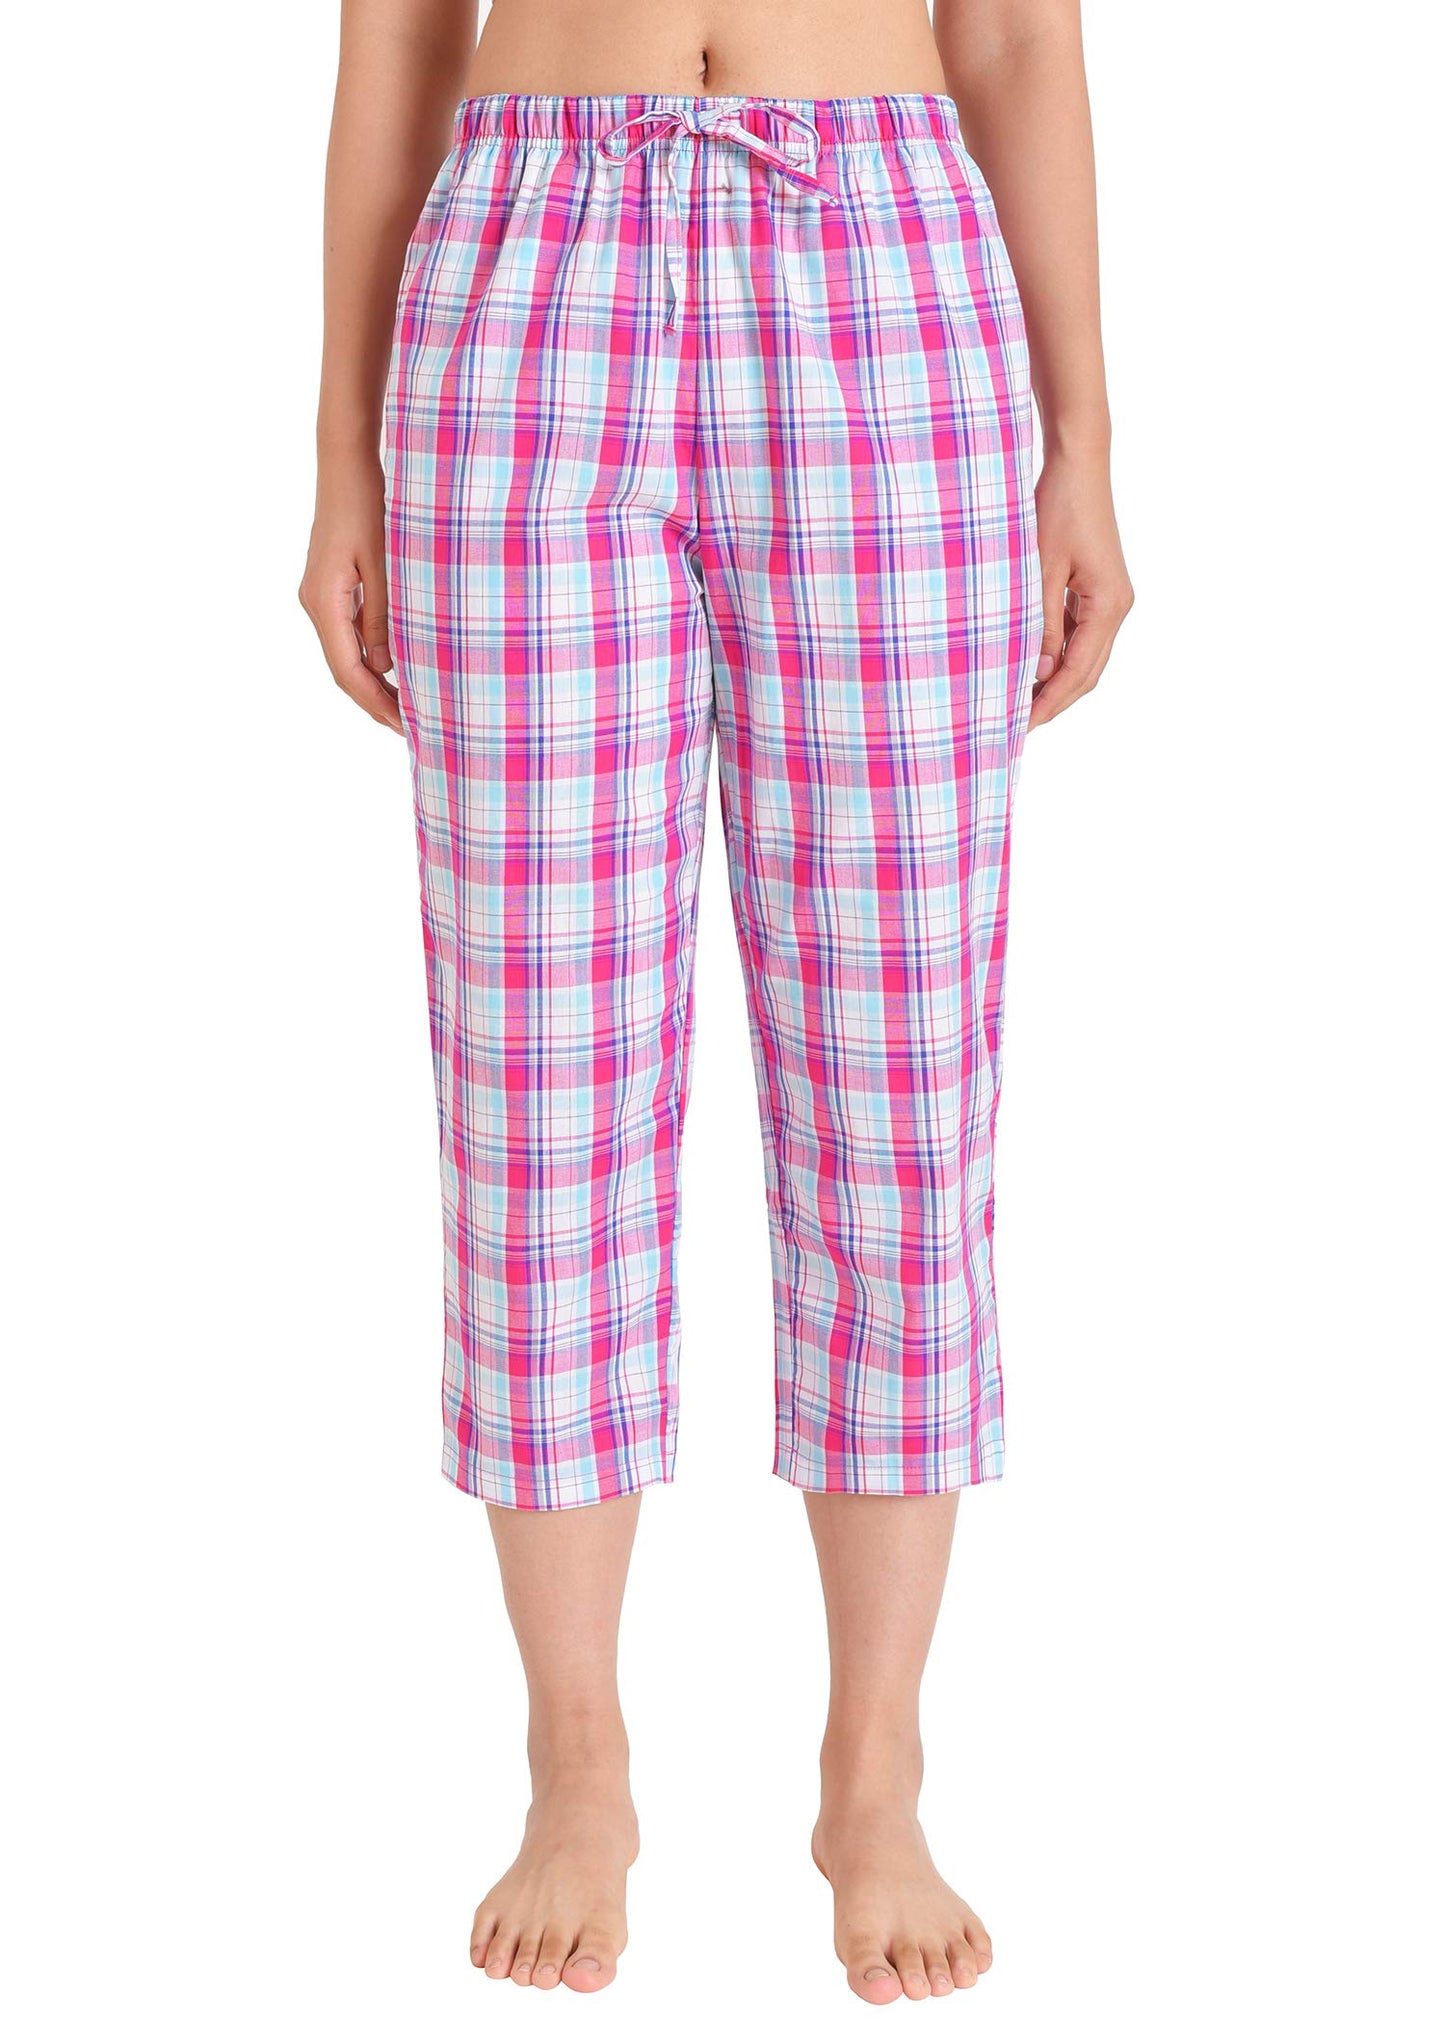 Women's Capri Pajama Pants Cotton PJ Bottoms with Pockets - Latuza